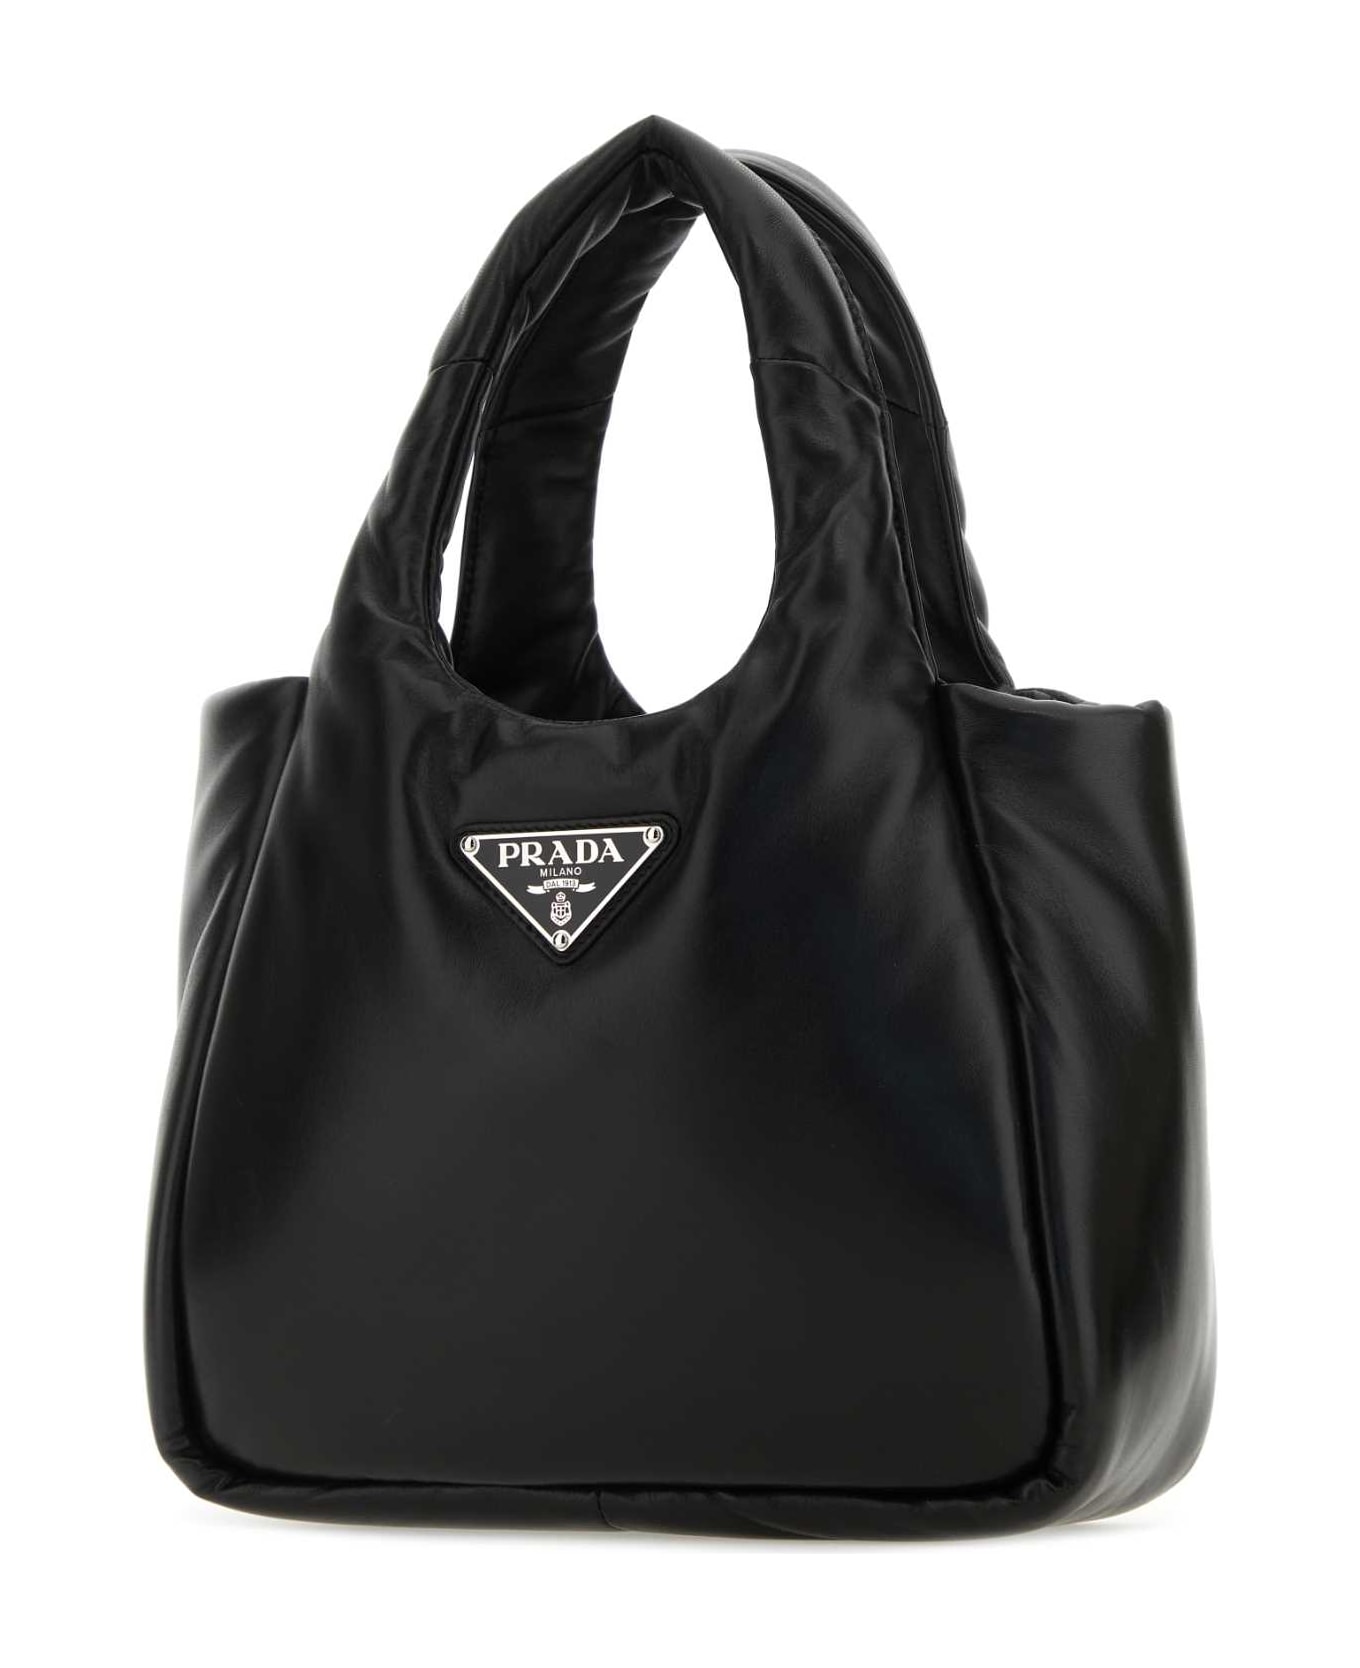 Prada Black Nappa Leather Handbag - NERO